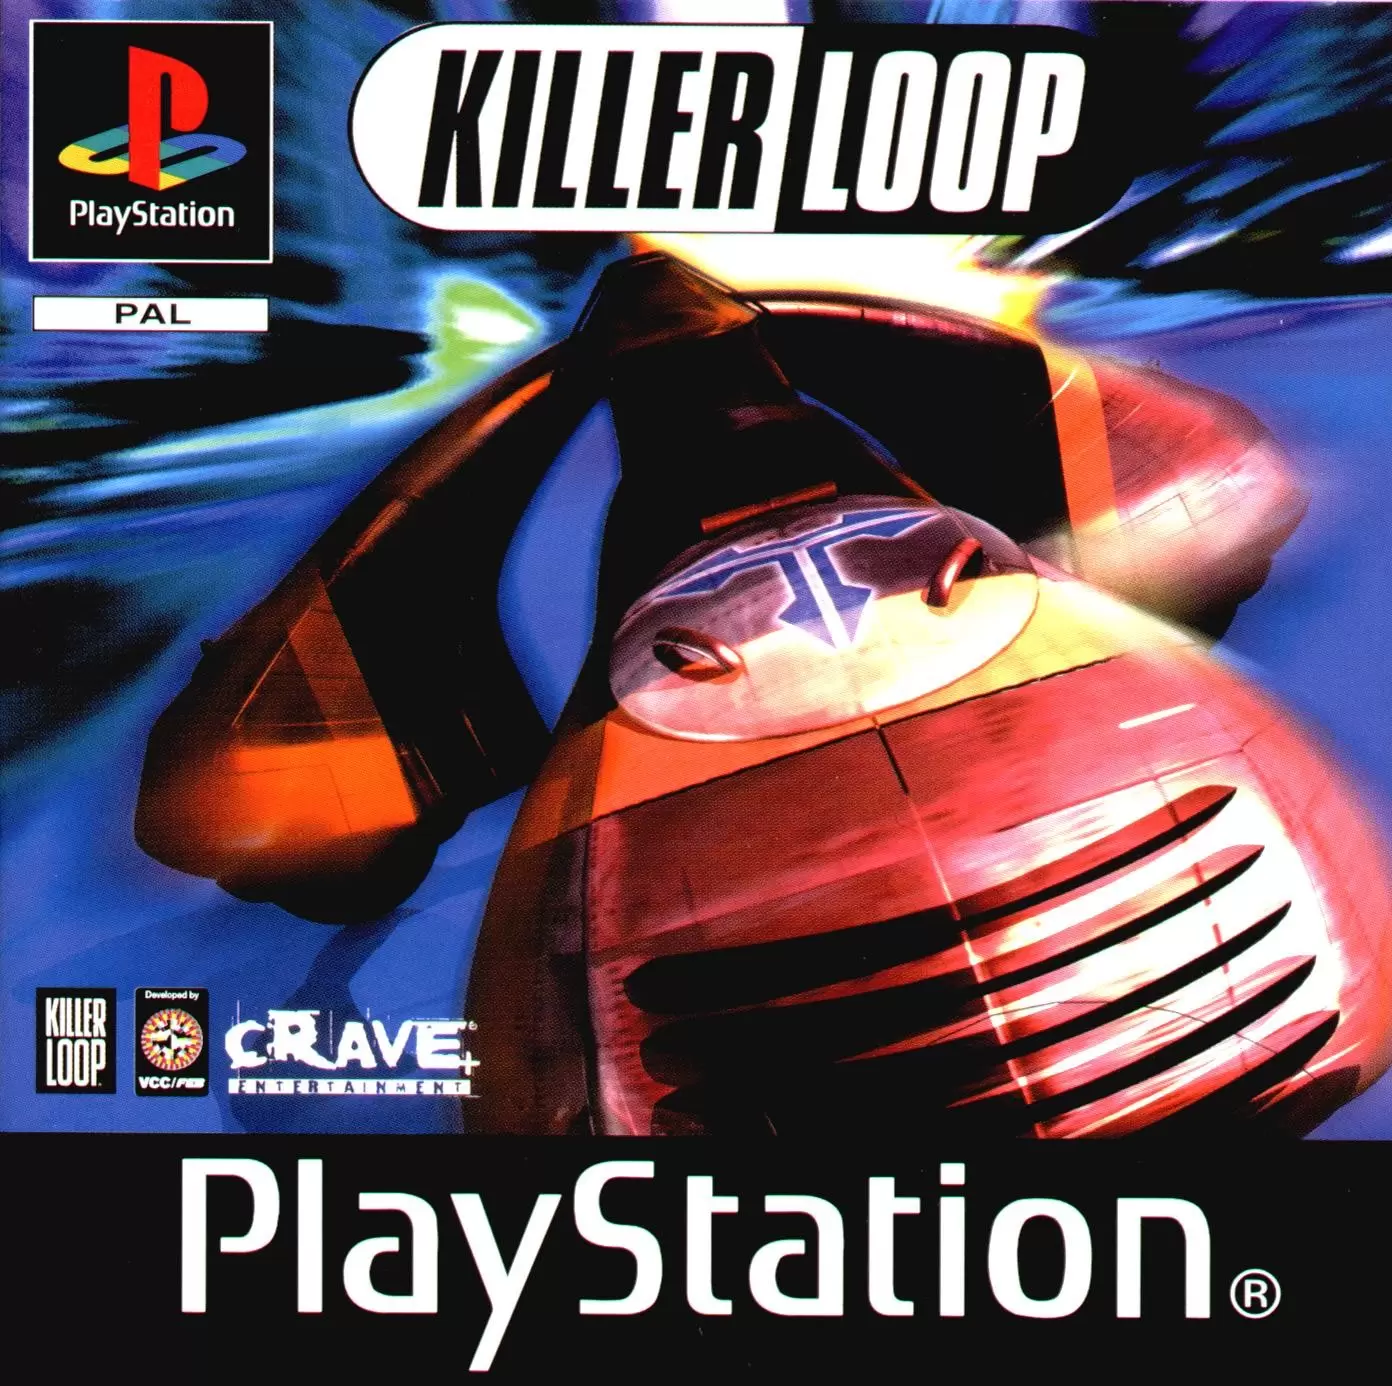 Playstation games - Killer Loop